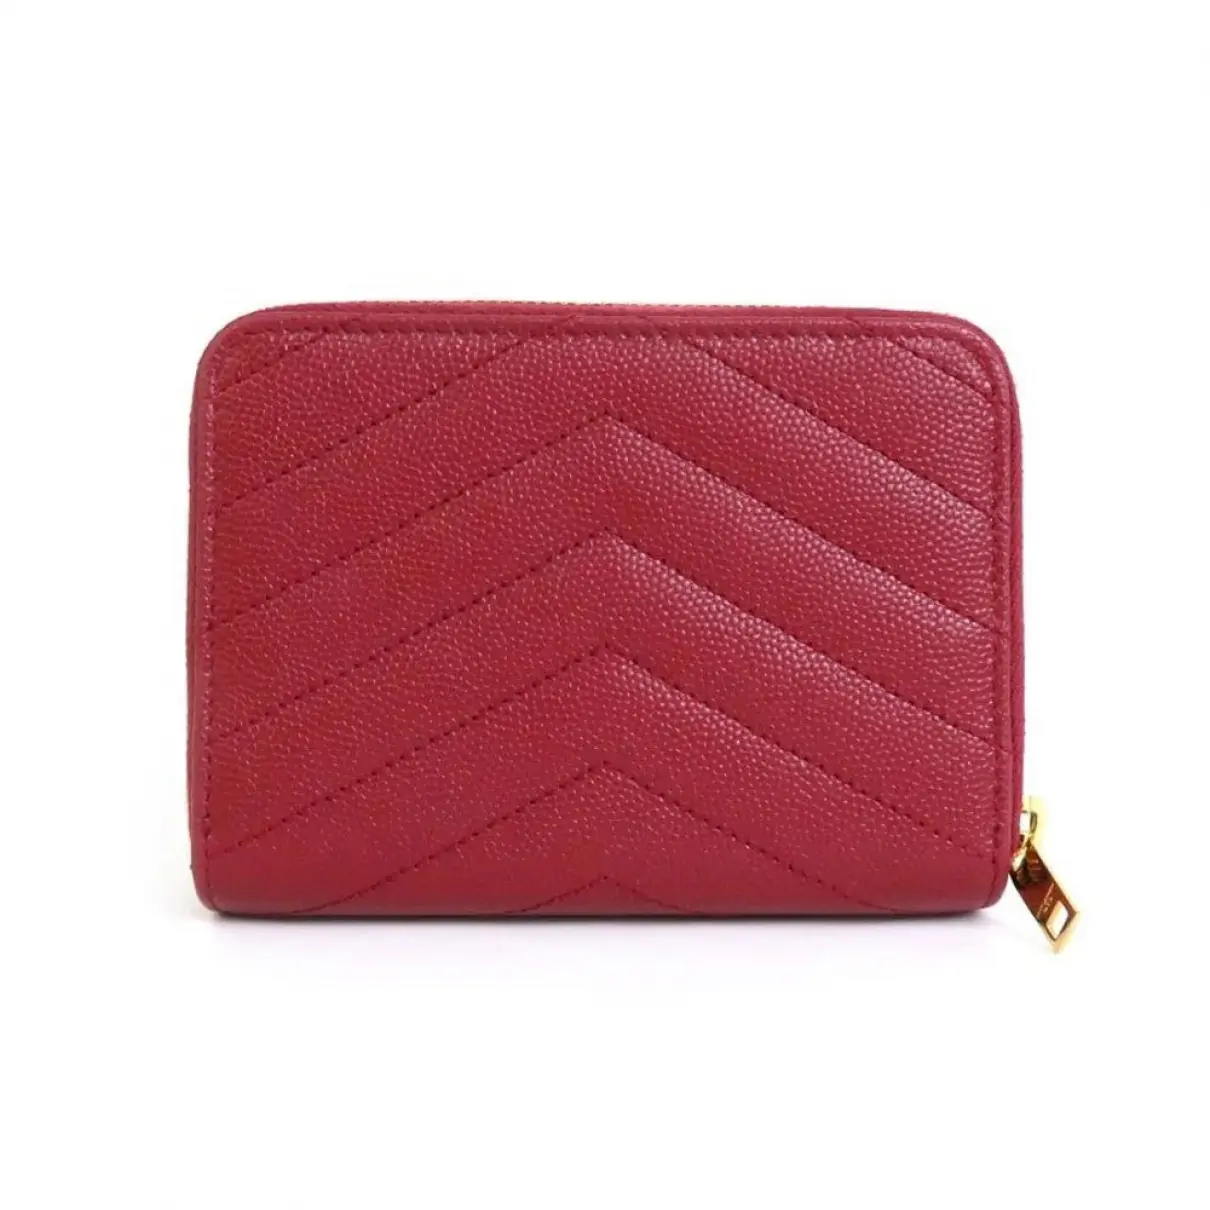 Buy Saint Laurent Ysl line leather wallet online